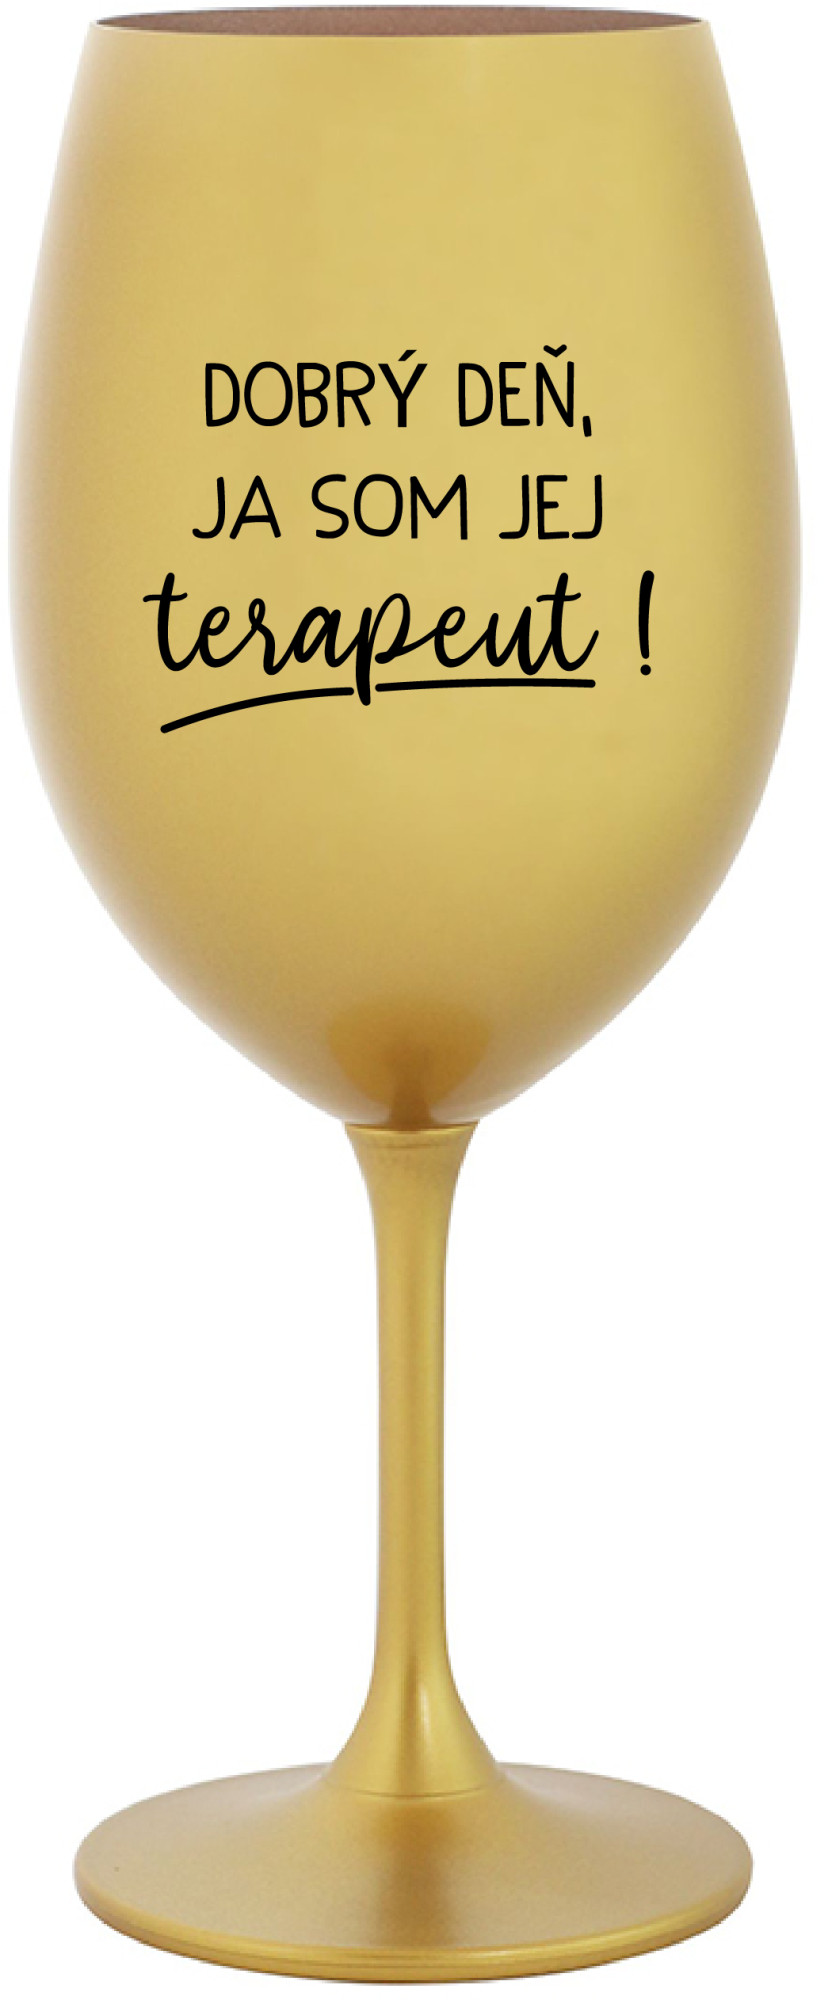 DOBRÝ DEŇ, JA SOM JEJ TERAPEUT! - zlatá sklenice na víno 350 ml